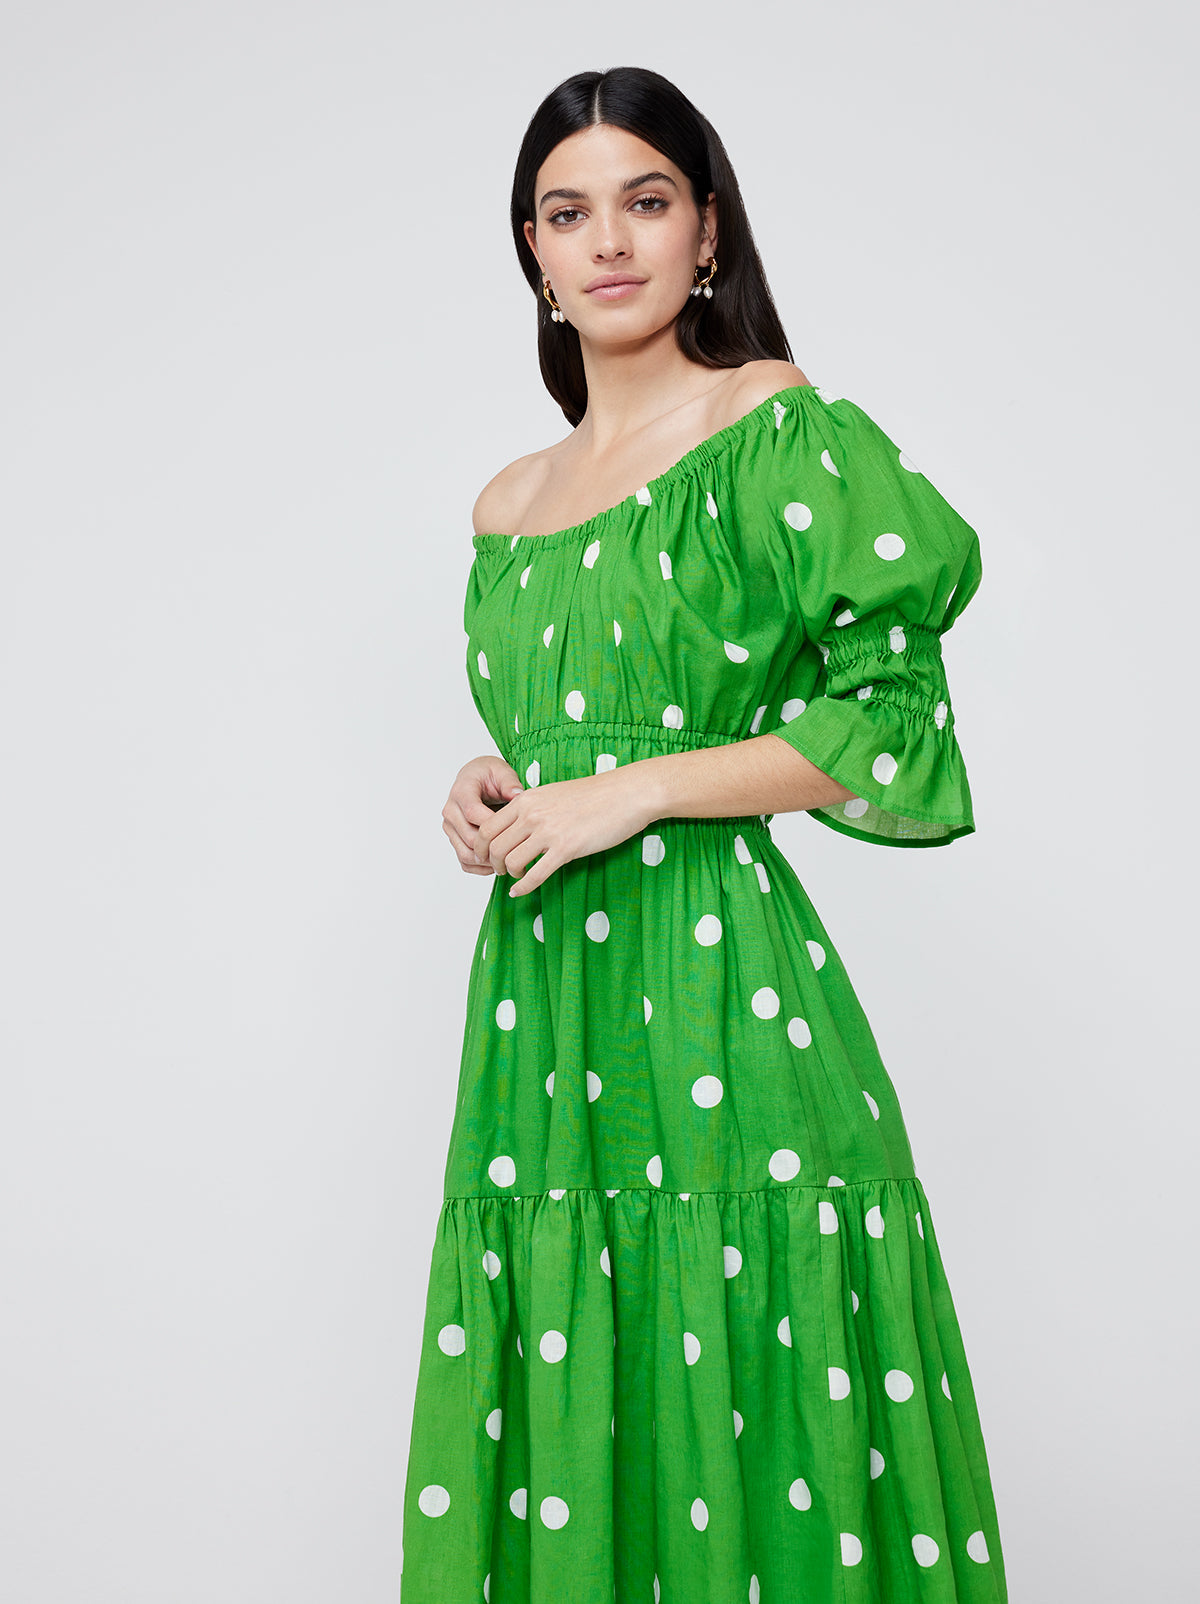 Margot Green Polka Dot Midi Dress